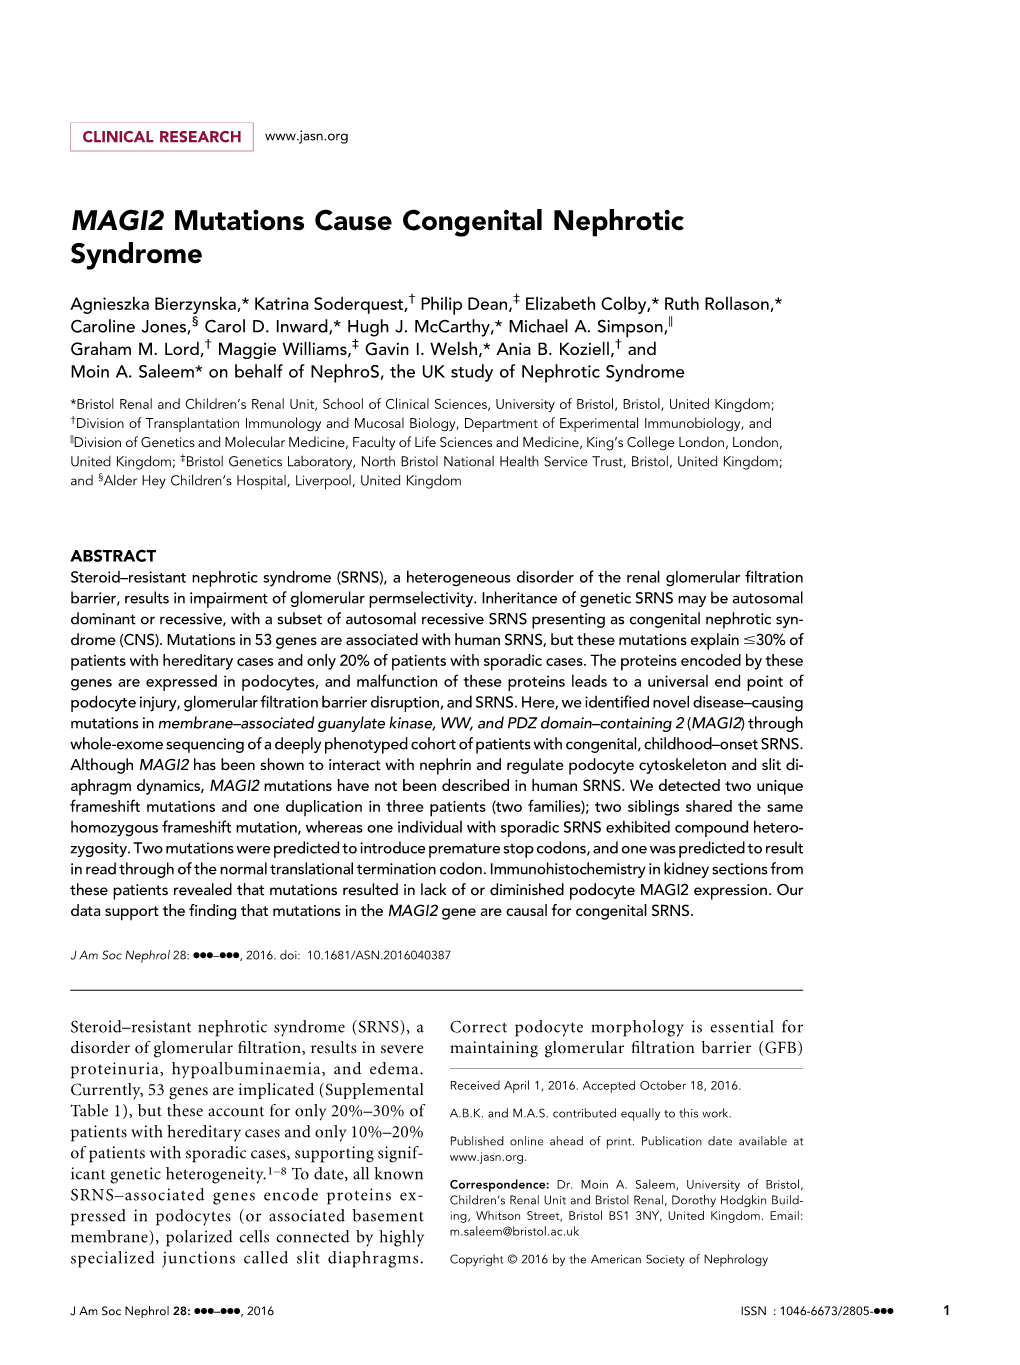 MAGI2 Mutations Cause Congenital Nephrotic Syndrome